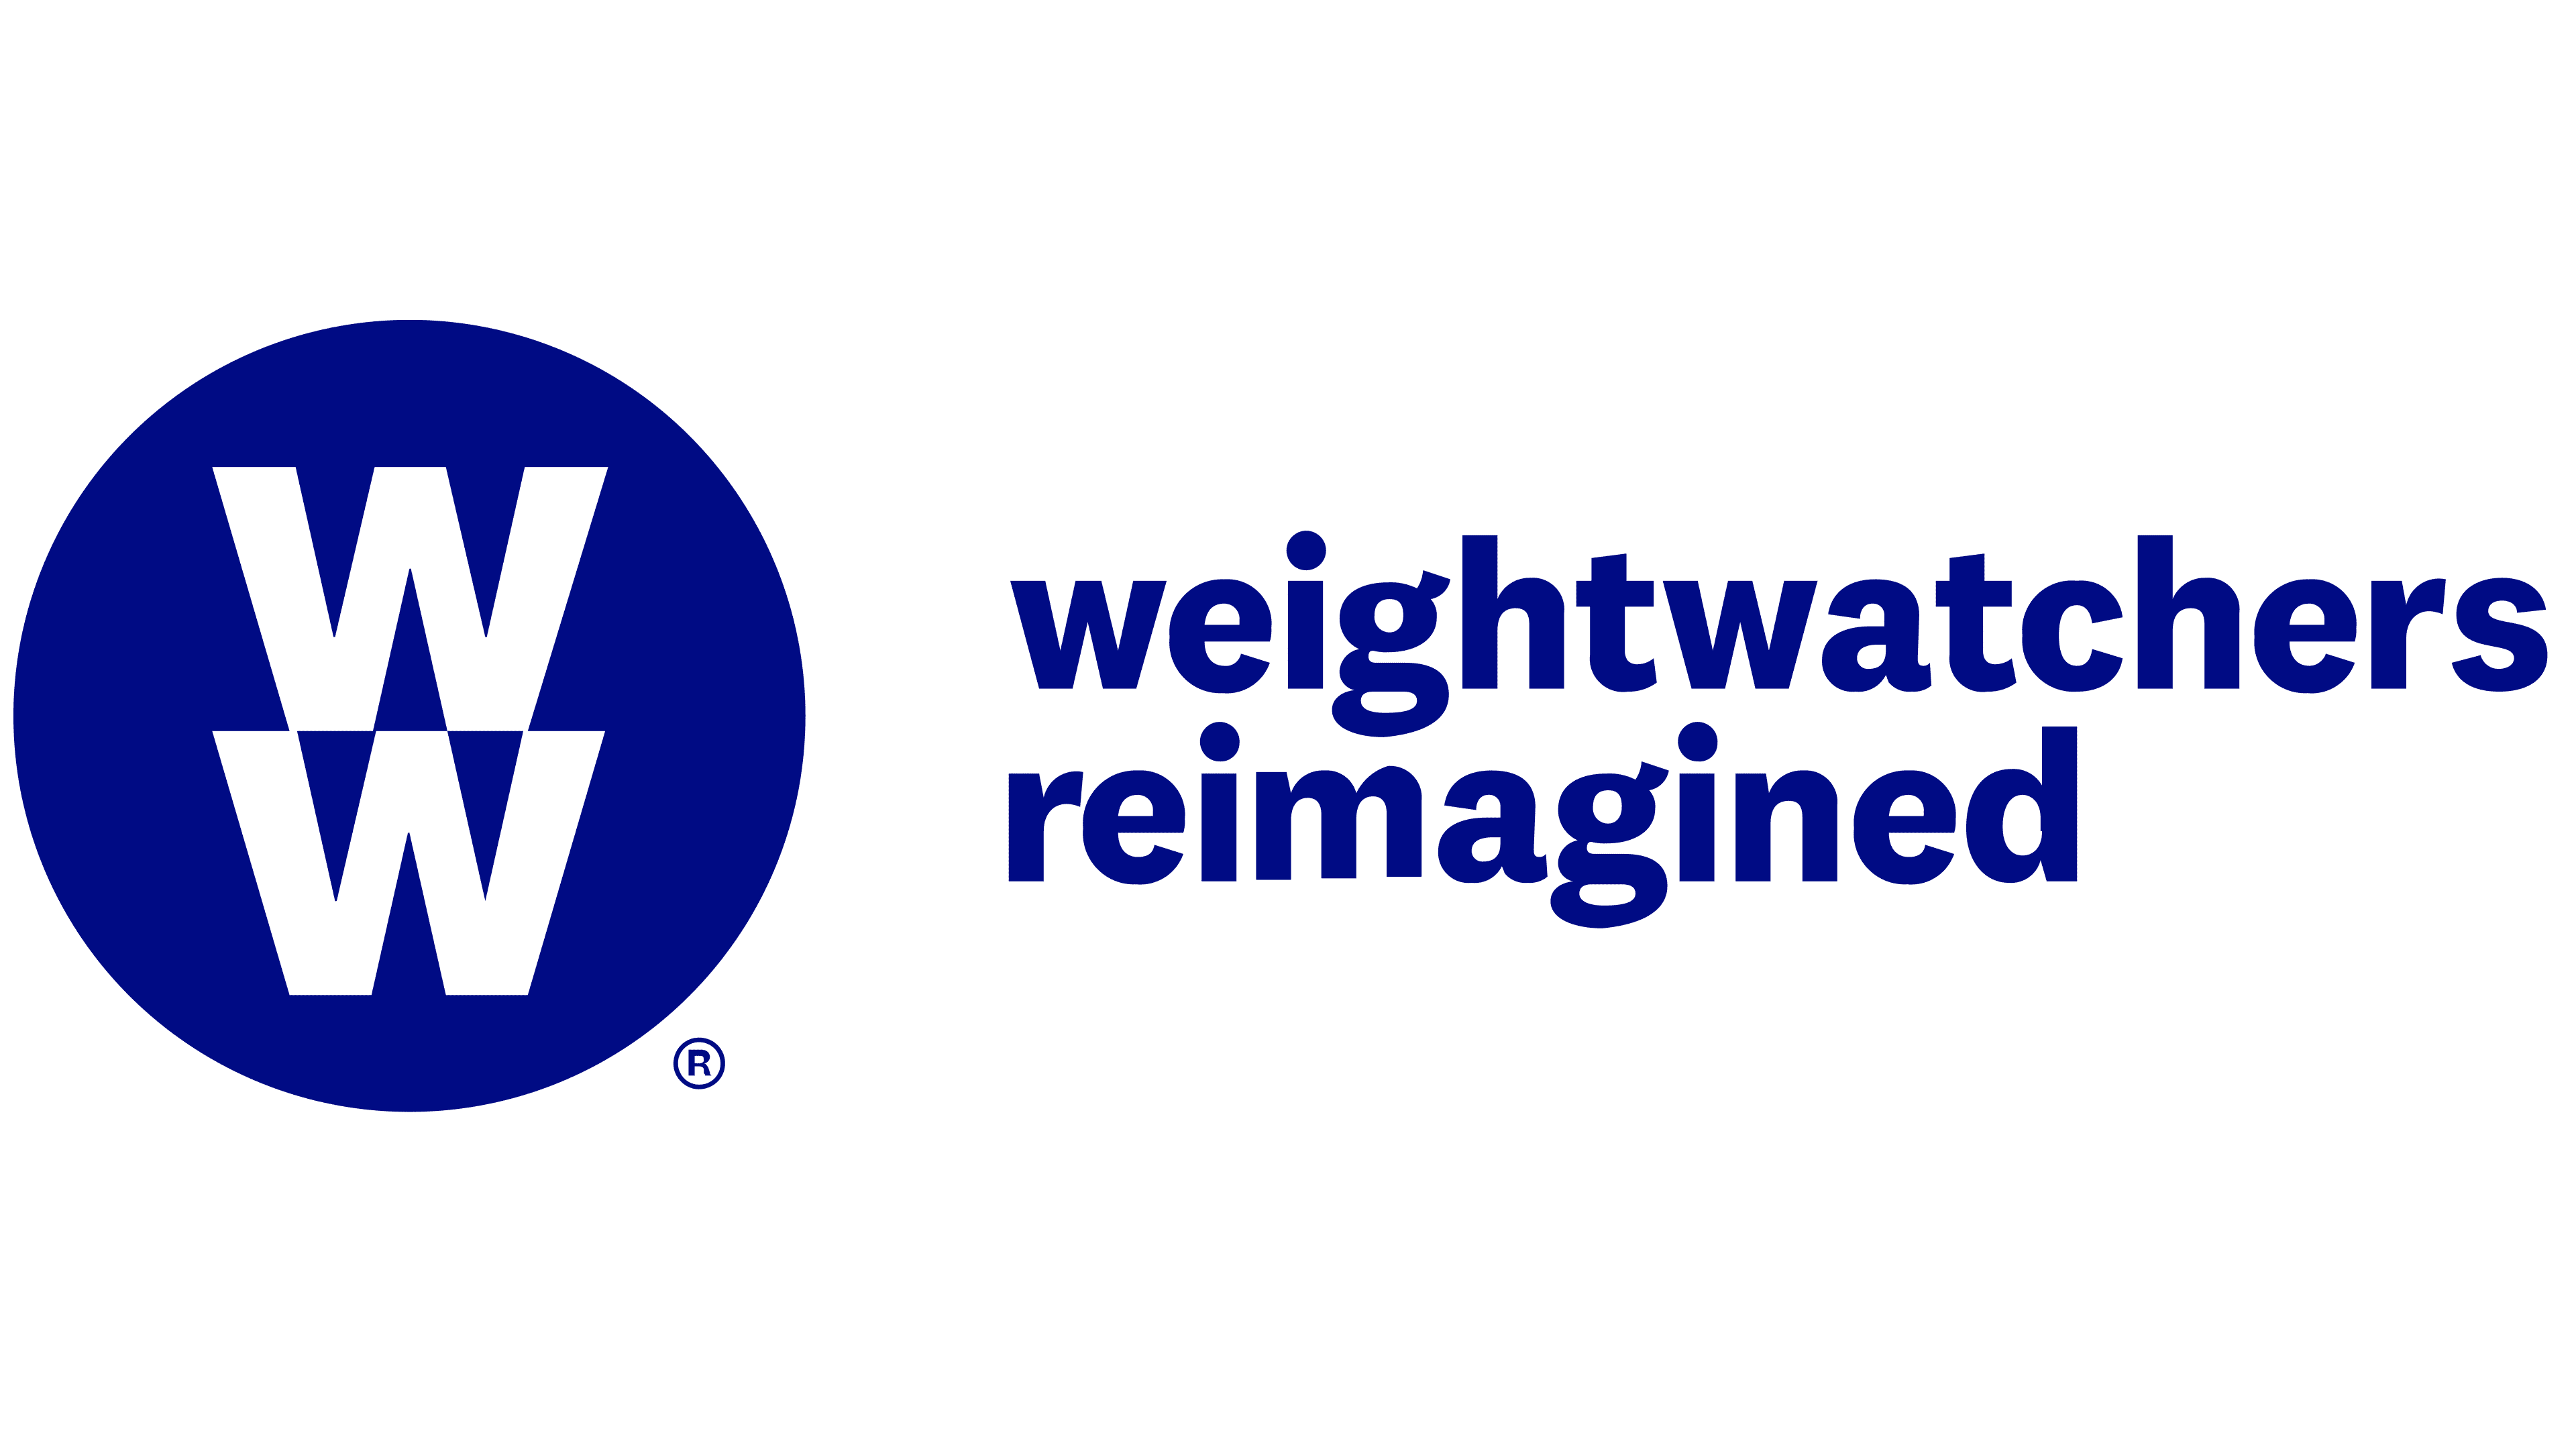 WW — Weight Watchers: Wellness Resources: Healthy IU: Indiana University